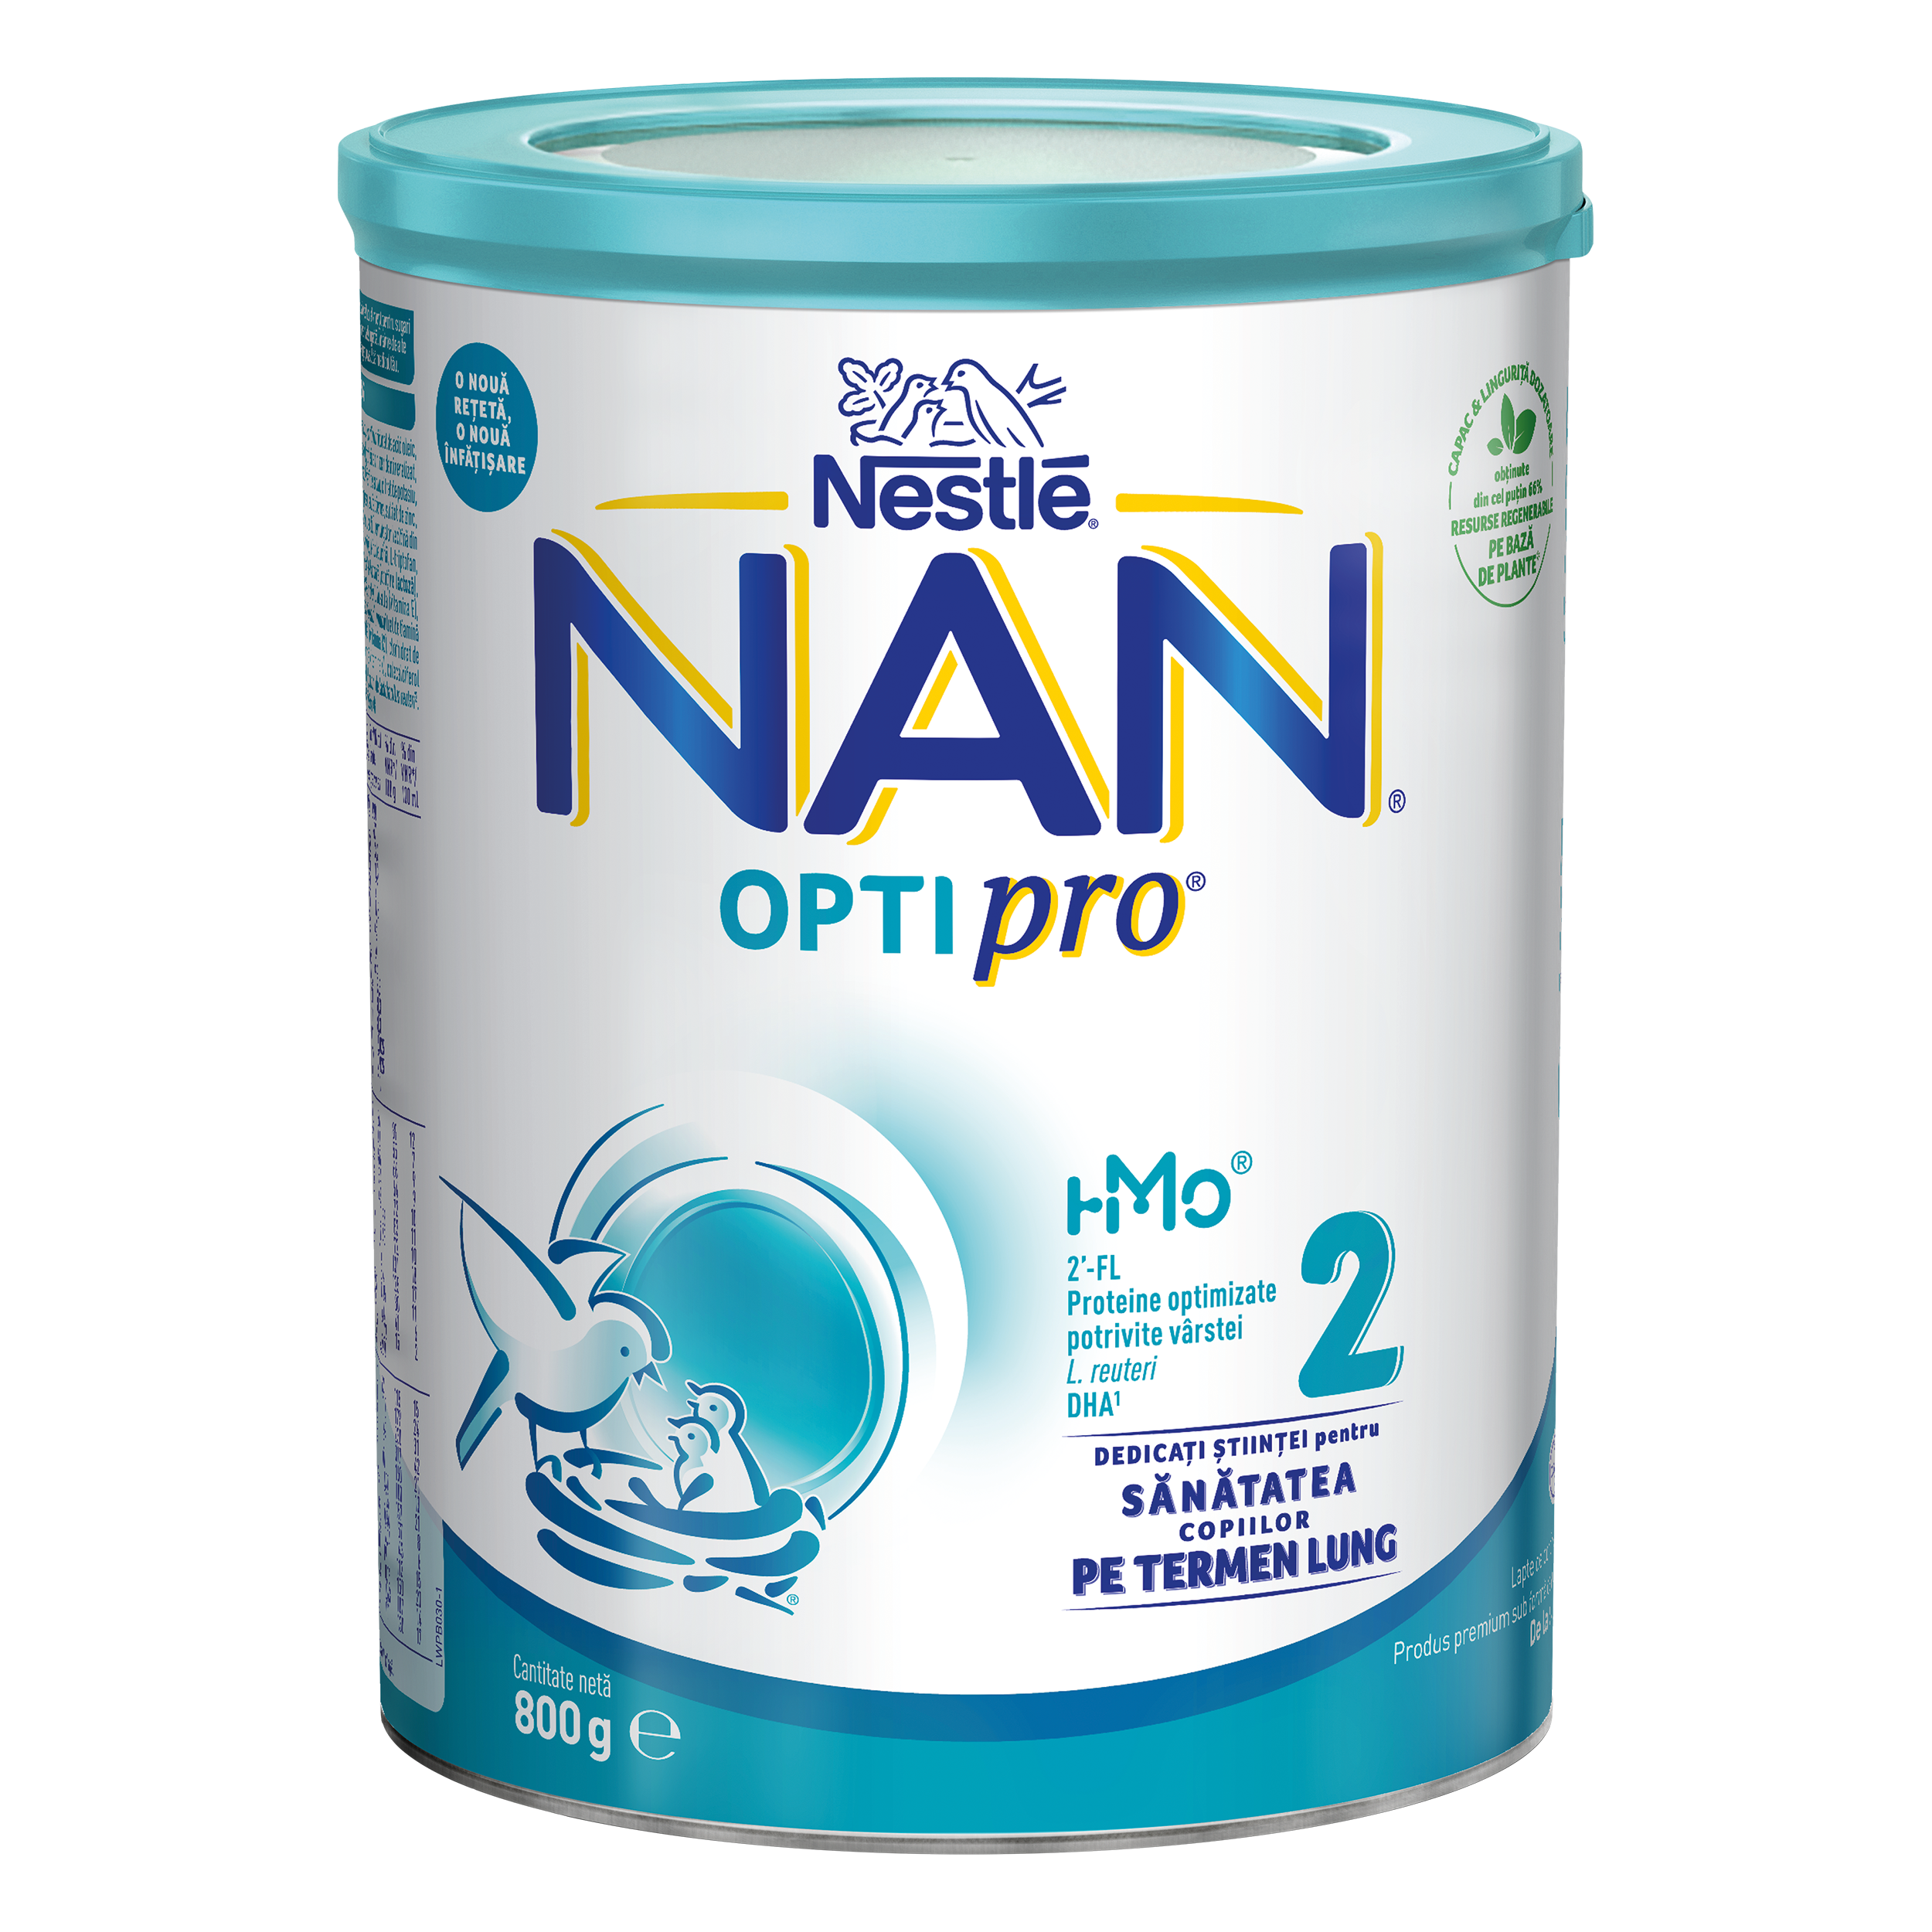 Lapte - Nestle Nan 2 Optipro hmo 800g, de la 6 luni, sinapis.ro